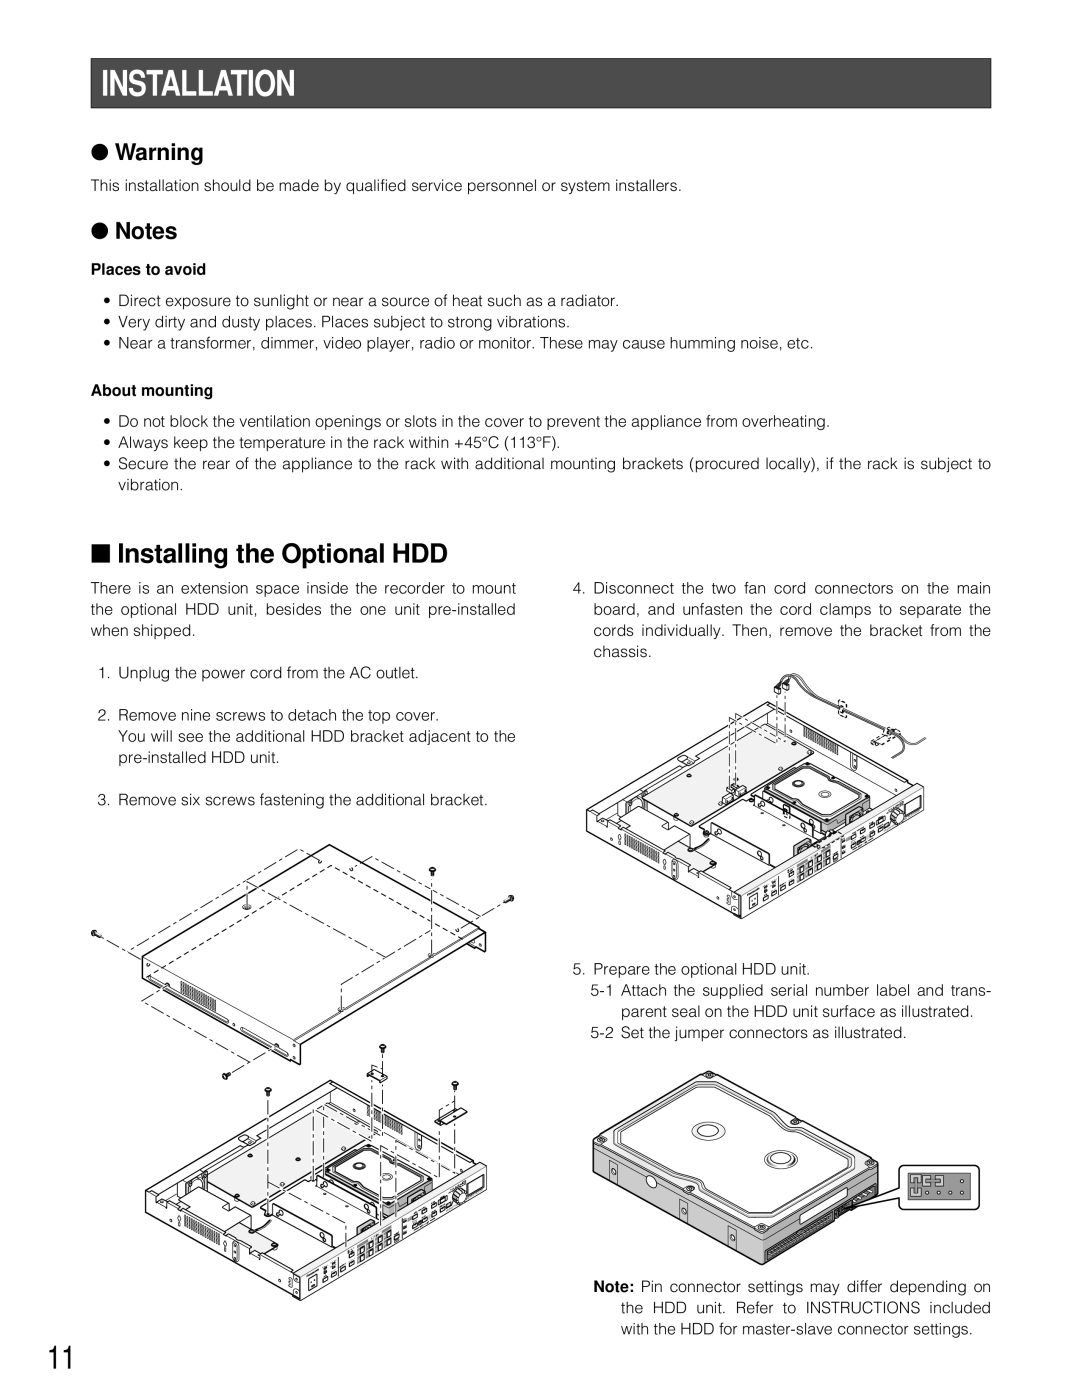 Panasonic WJ-HD200 manual Installation, Installing the Optional HDD 